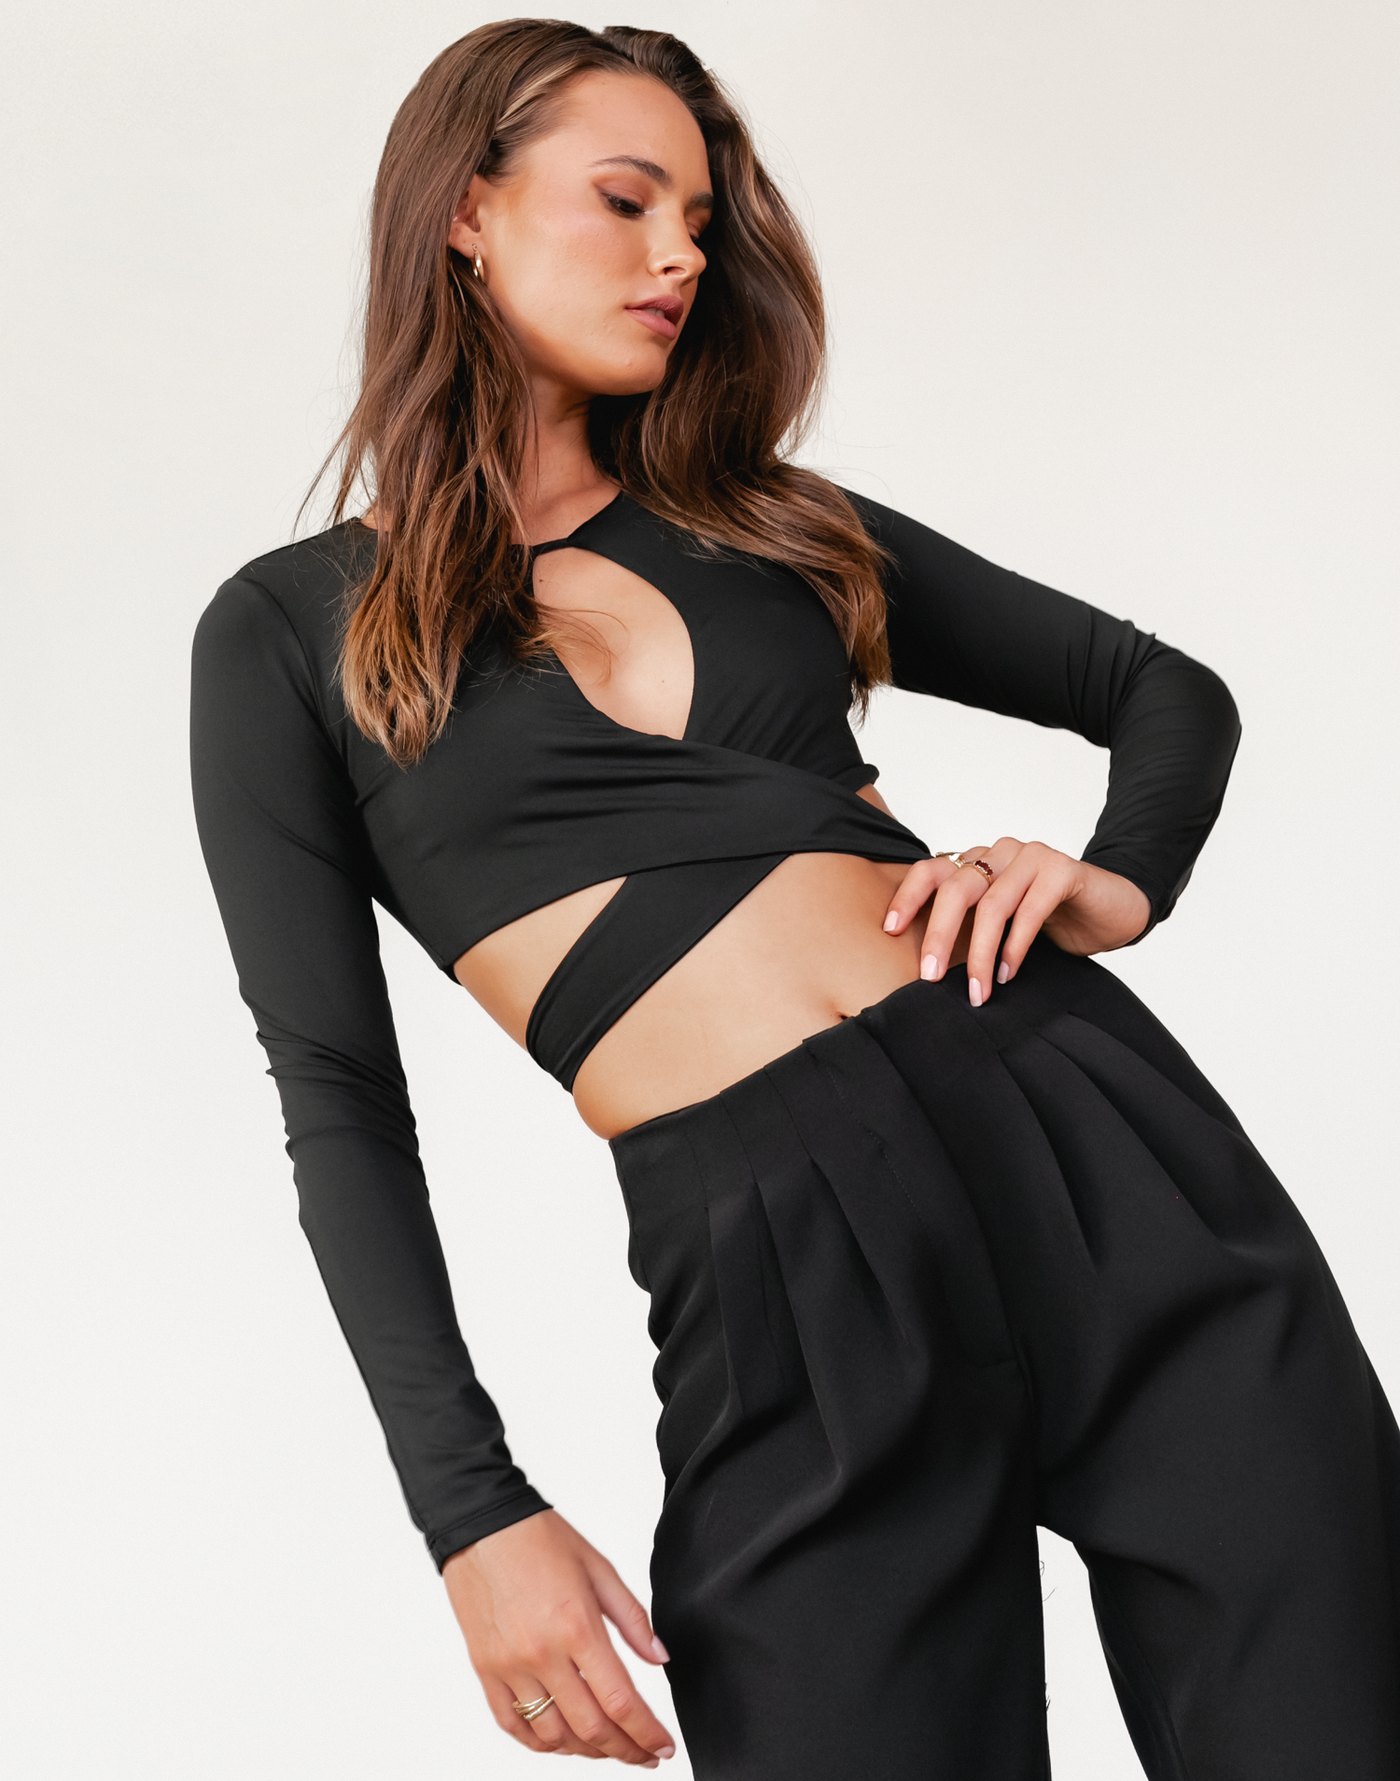 Kimberly Crop Top (Black) - Long Sleeve Crop - Women's Top - Charcoal Clothing